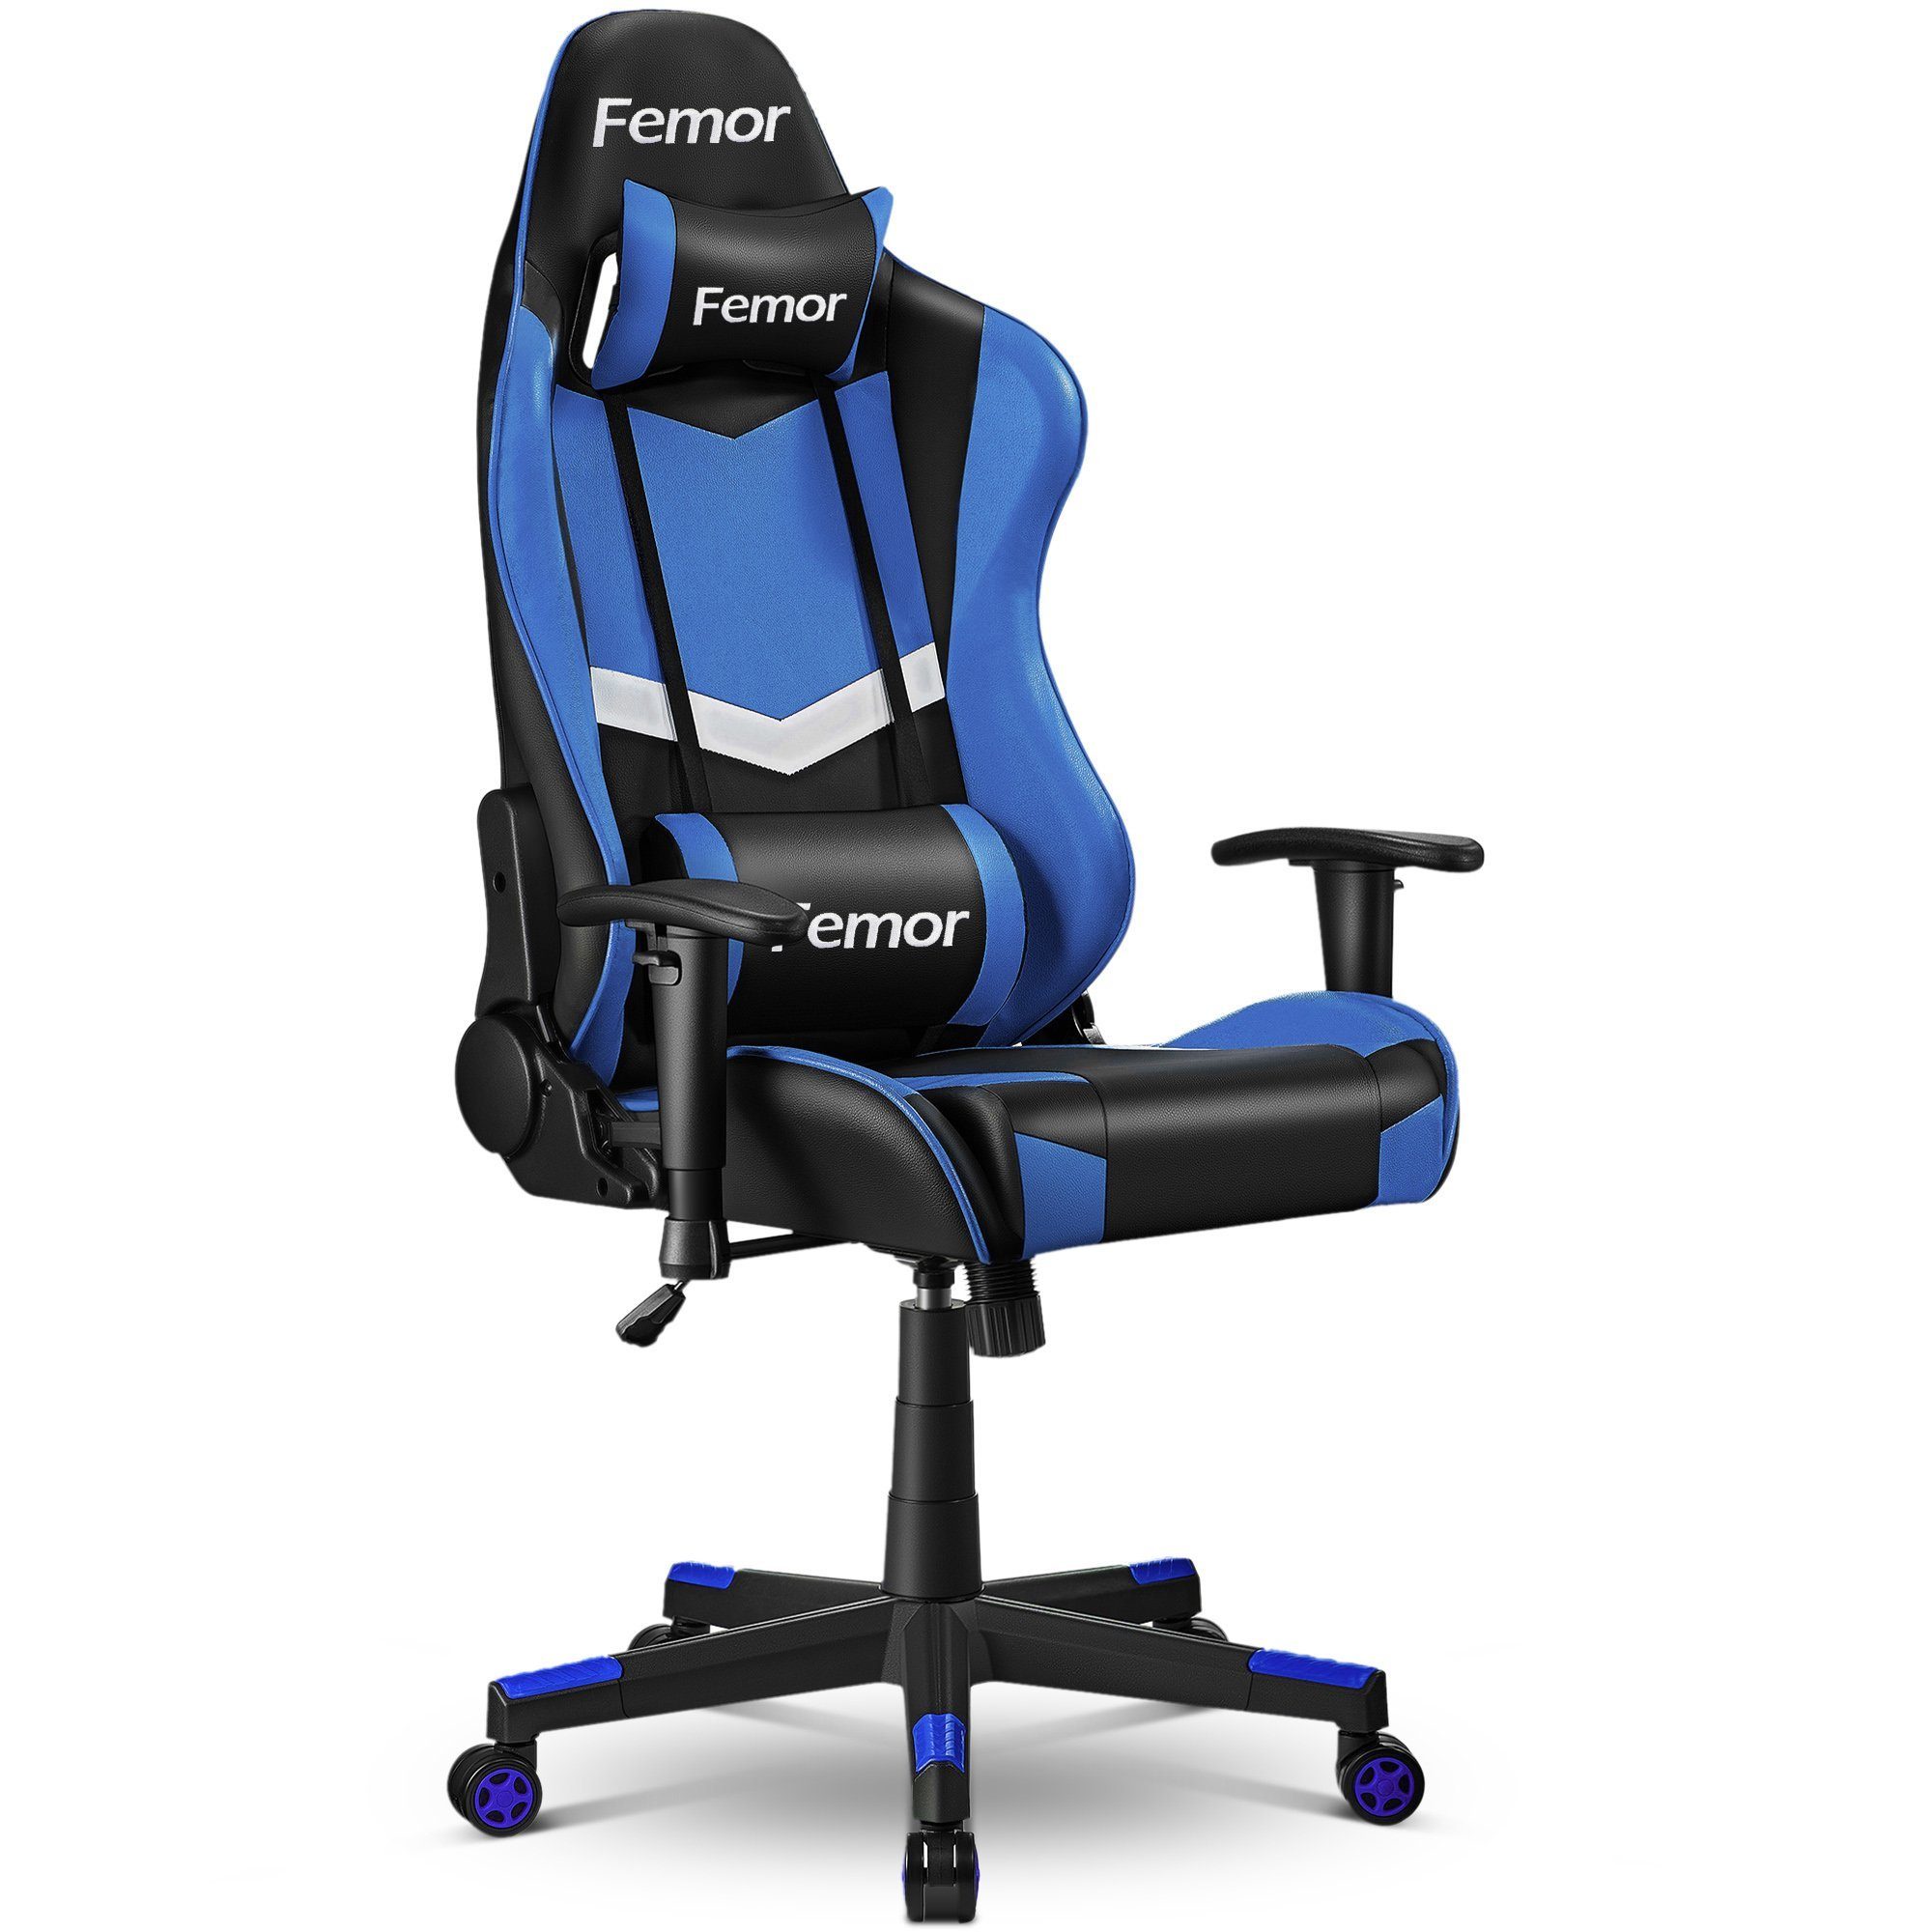 Femor Gaming Chair Gaming Stuhl, Gamer Stuhl 90°-160° Neigungswinkel blau